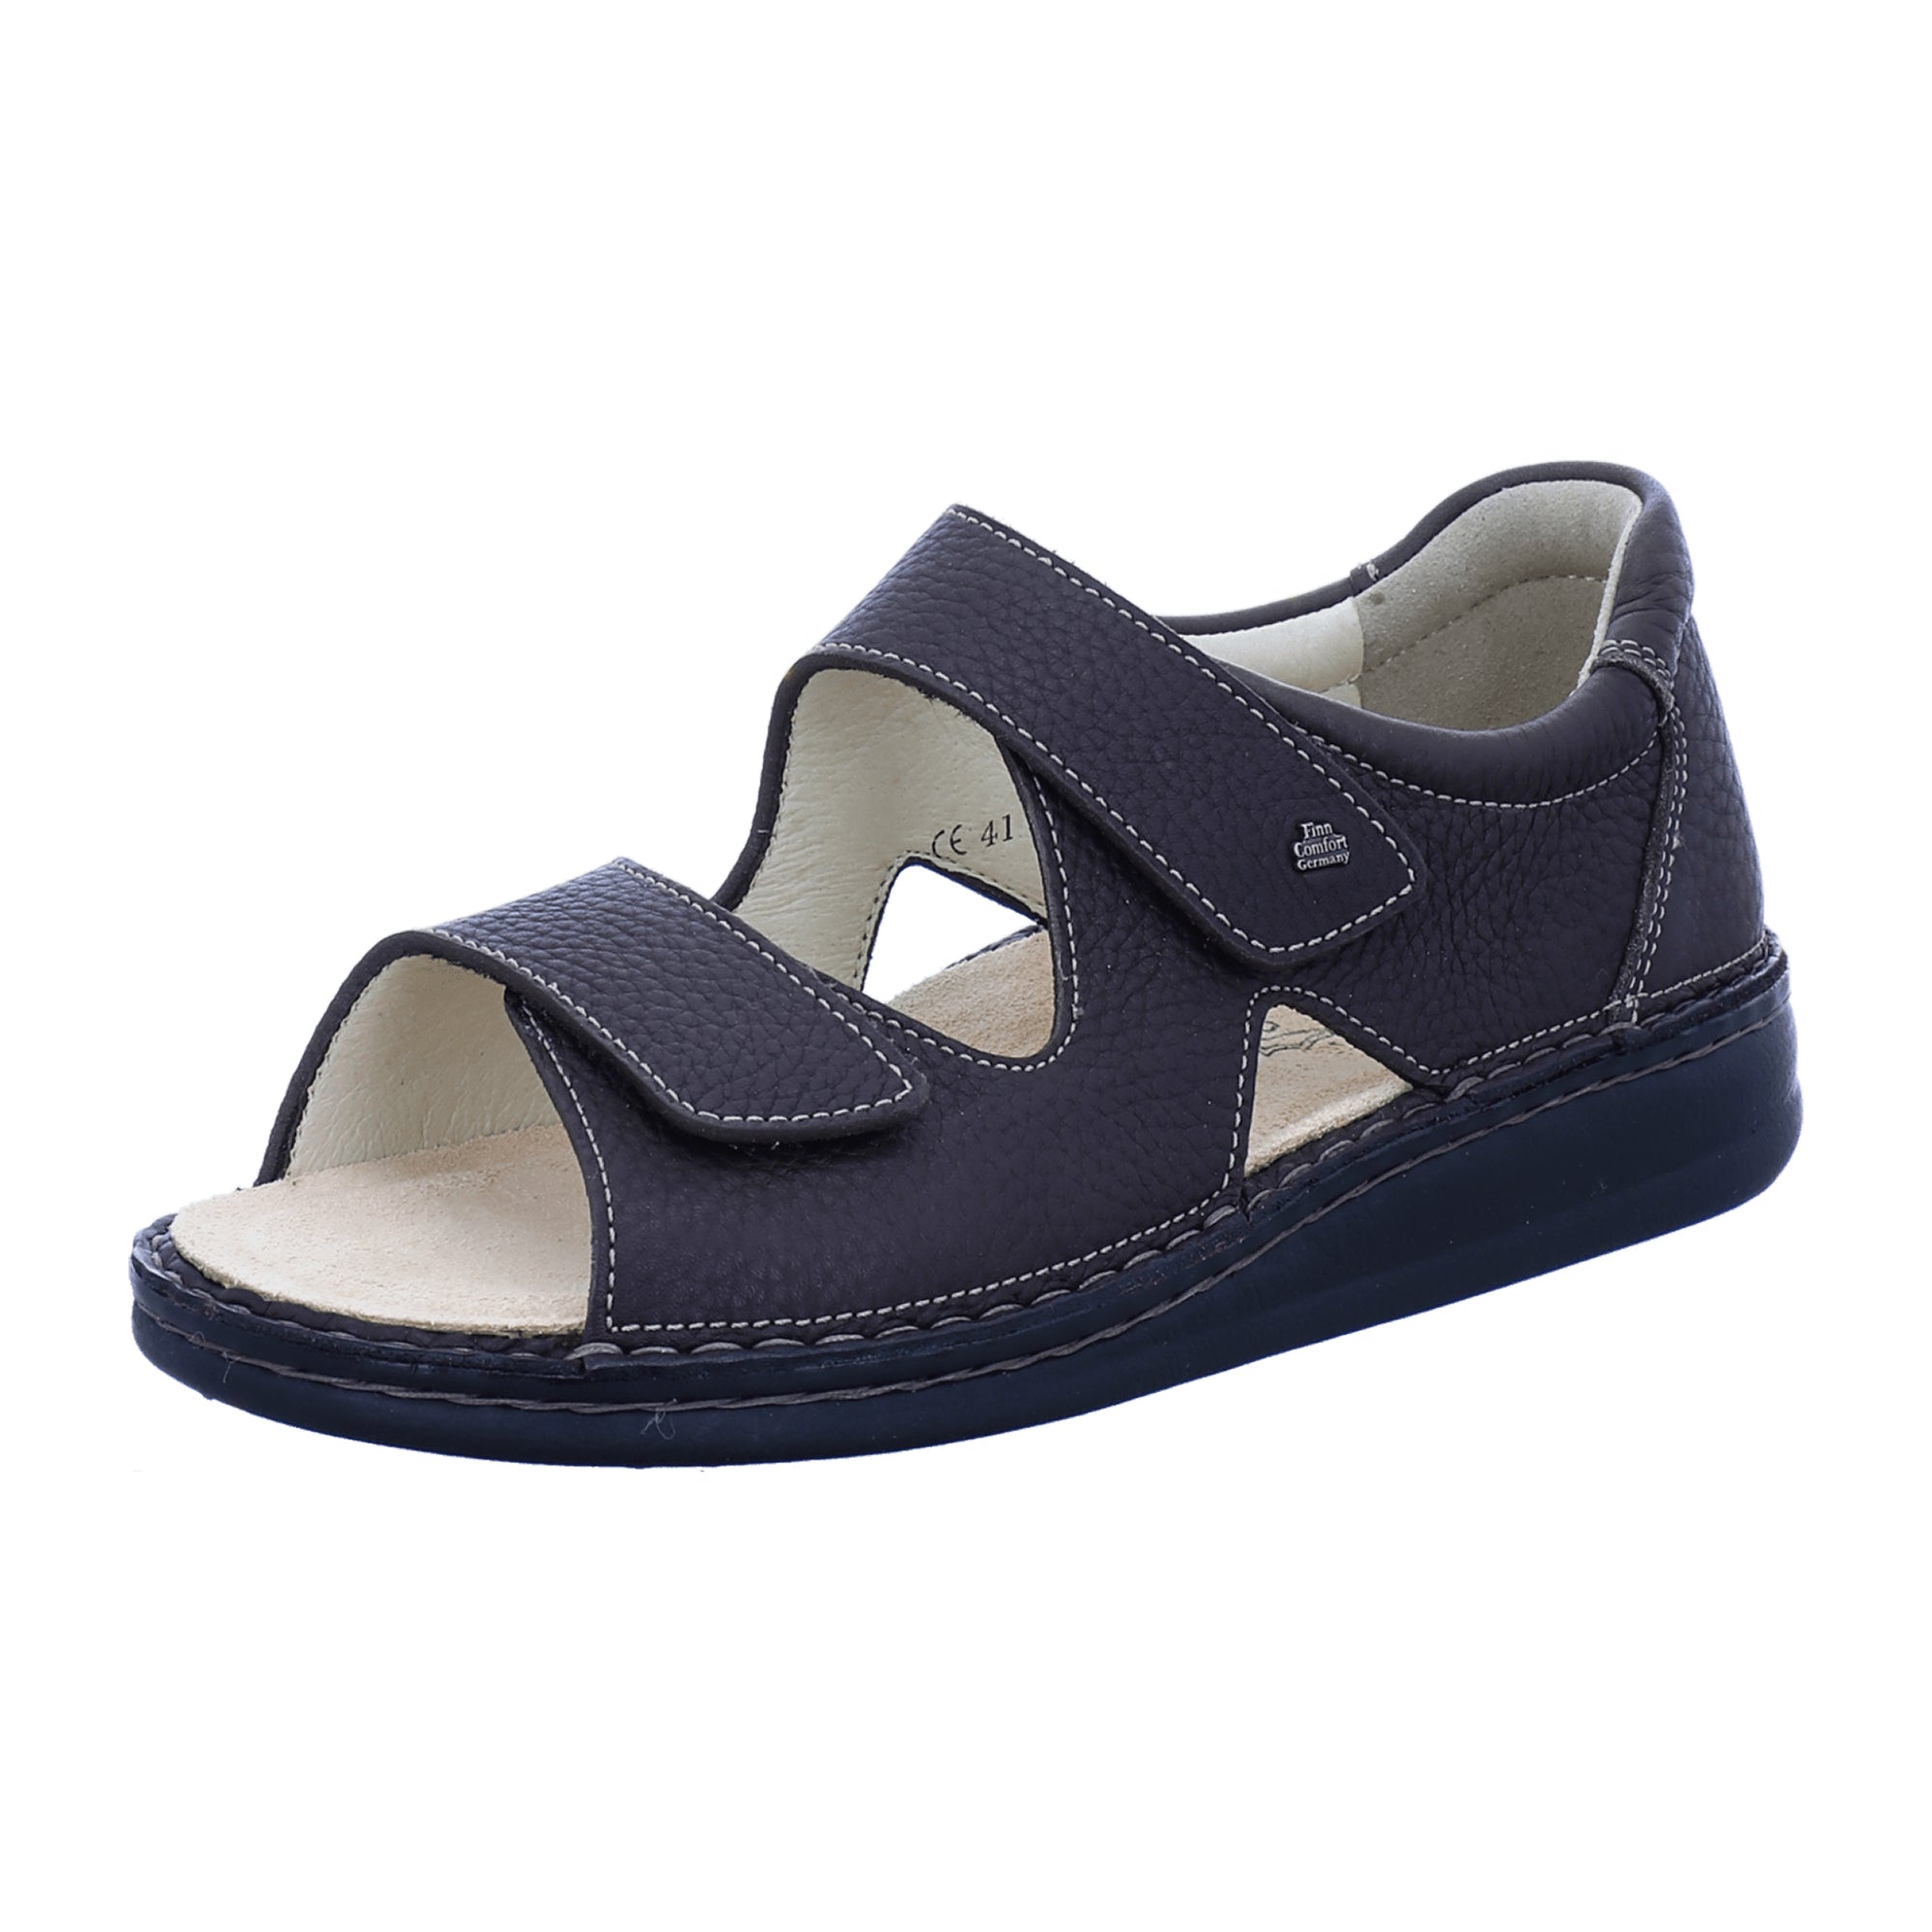 Finn Comfort Argos-S Men's Comfort Sandals, Stylish Brown Leather